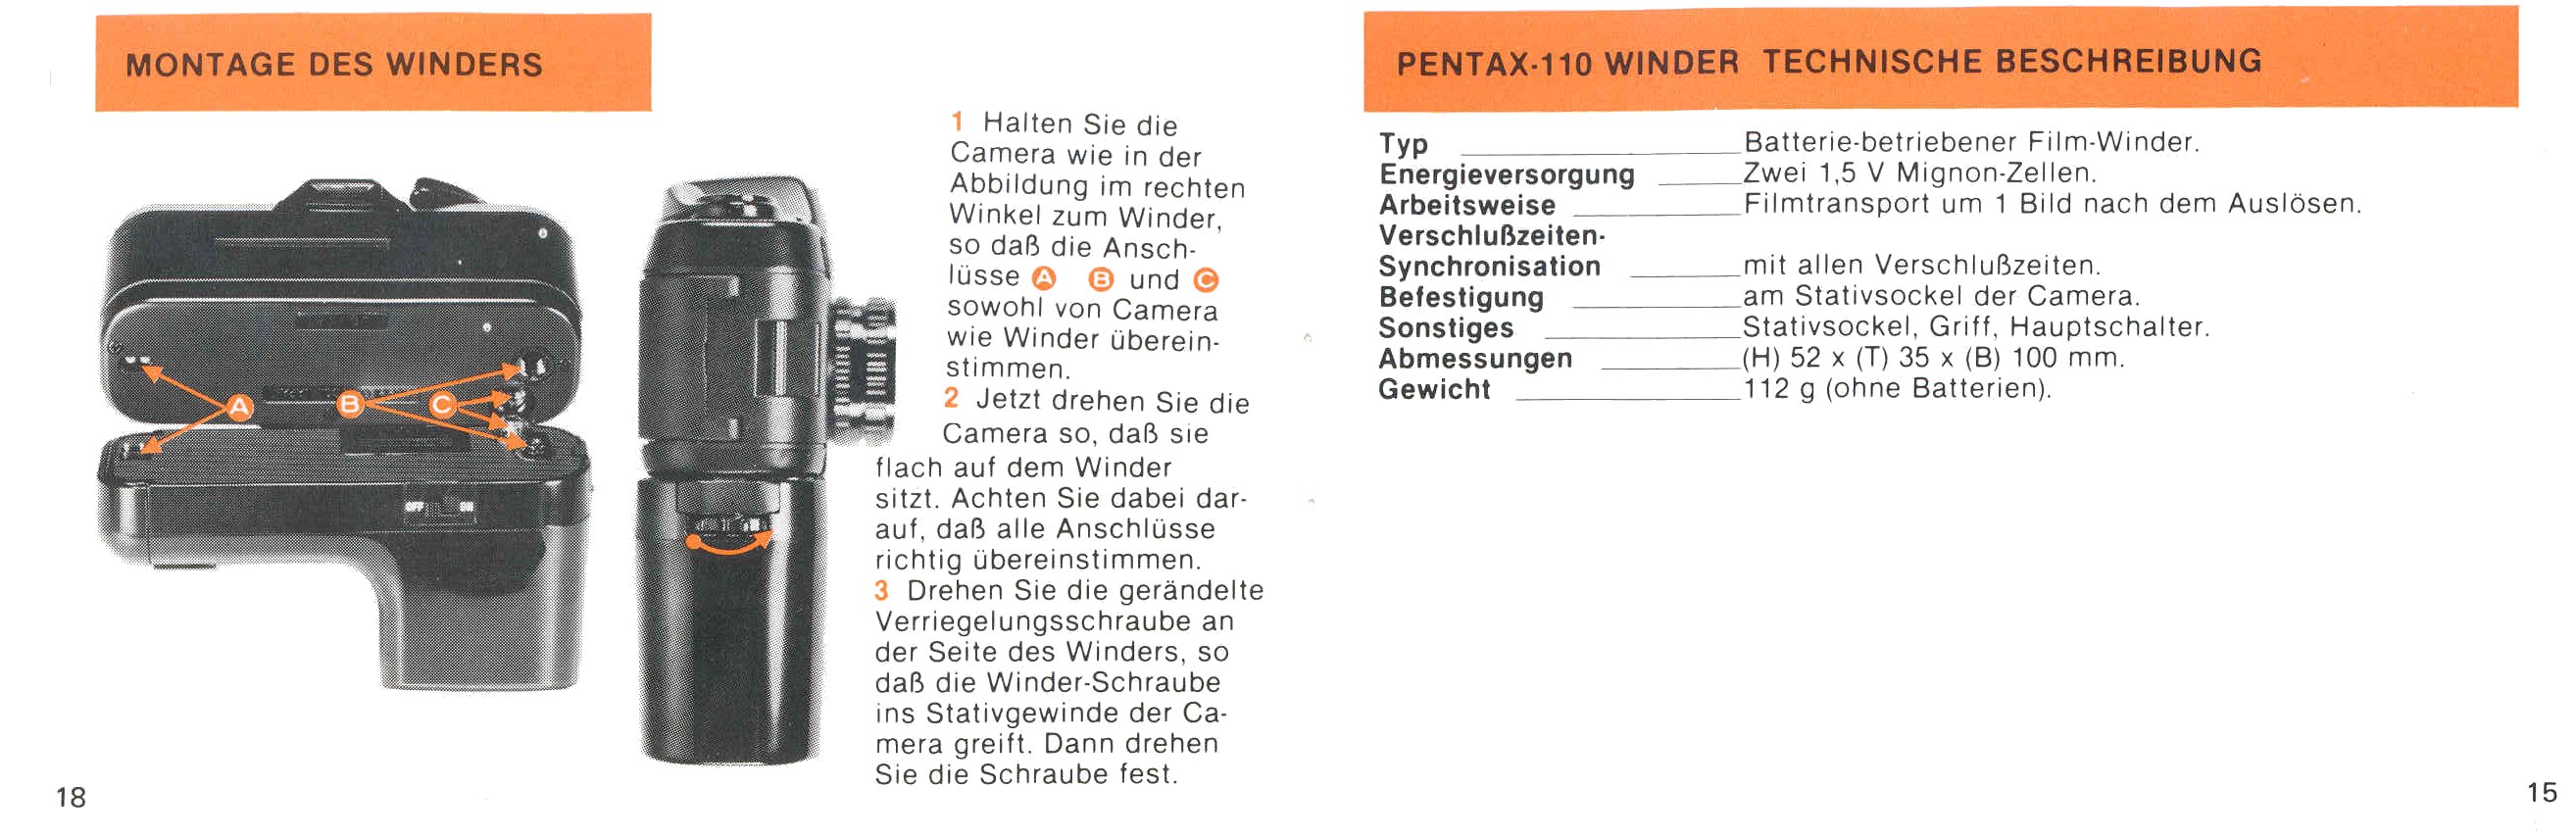 Pentax 110 Manual